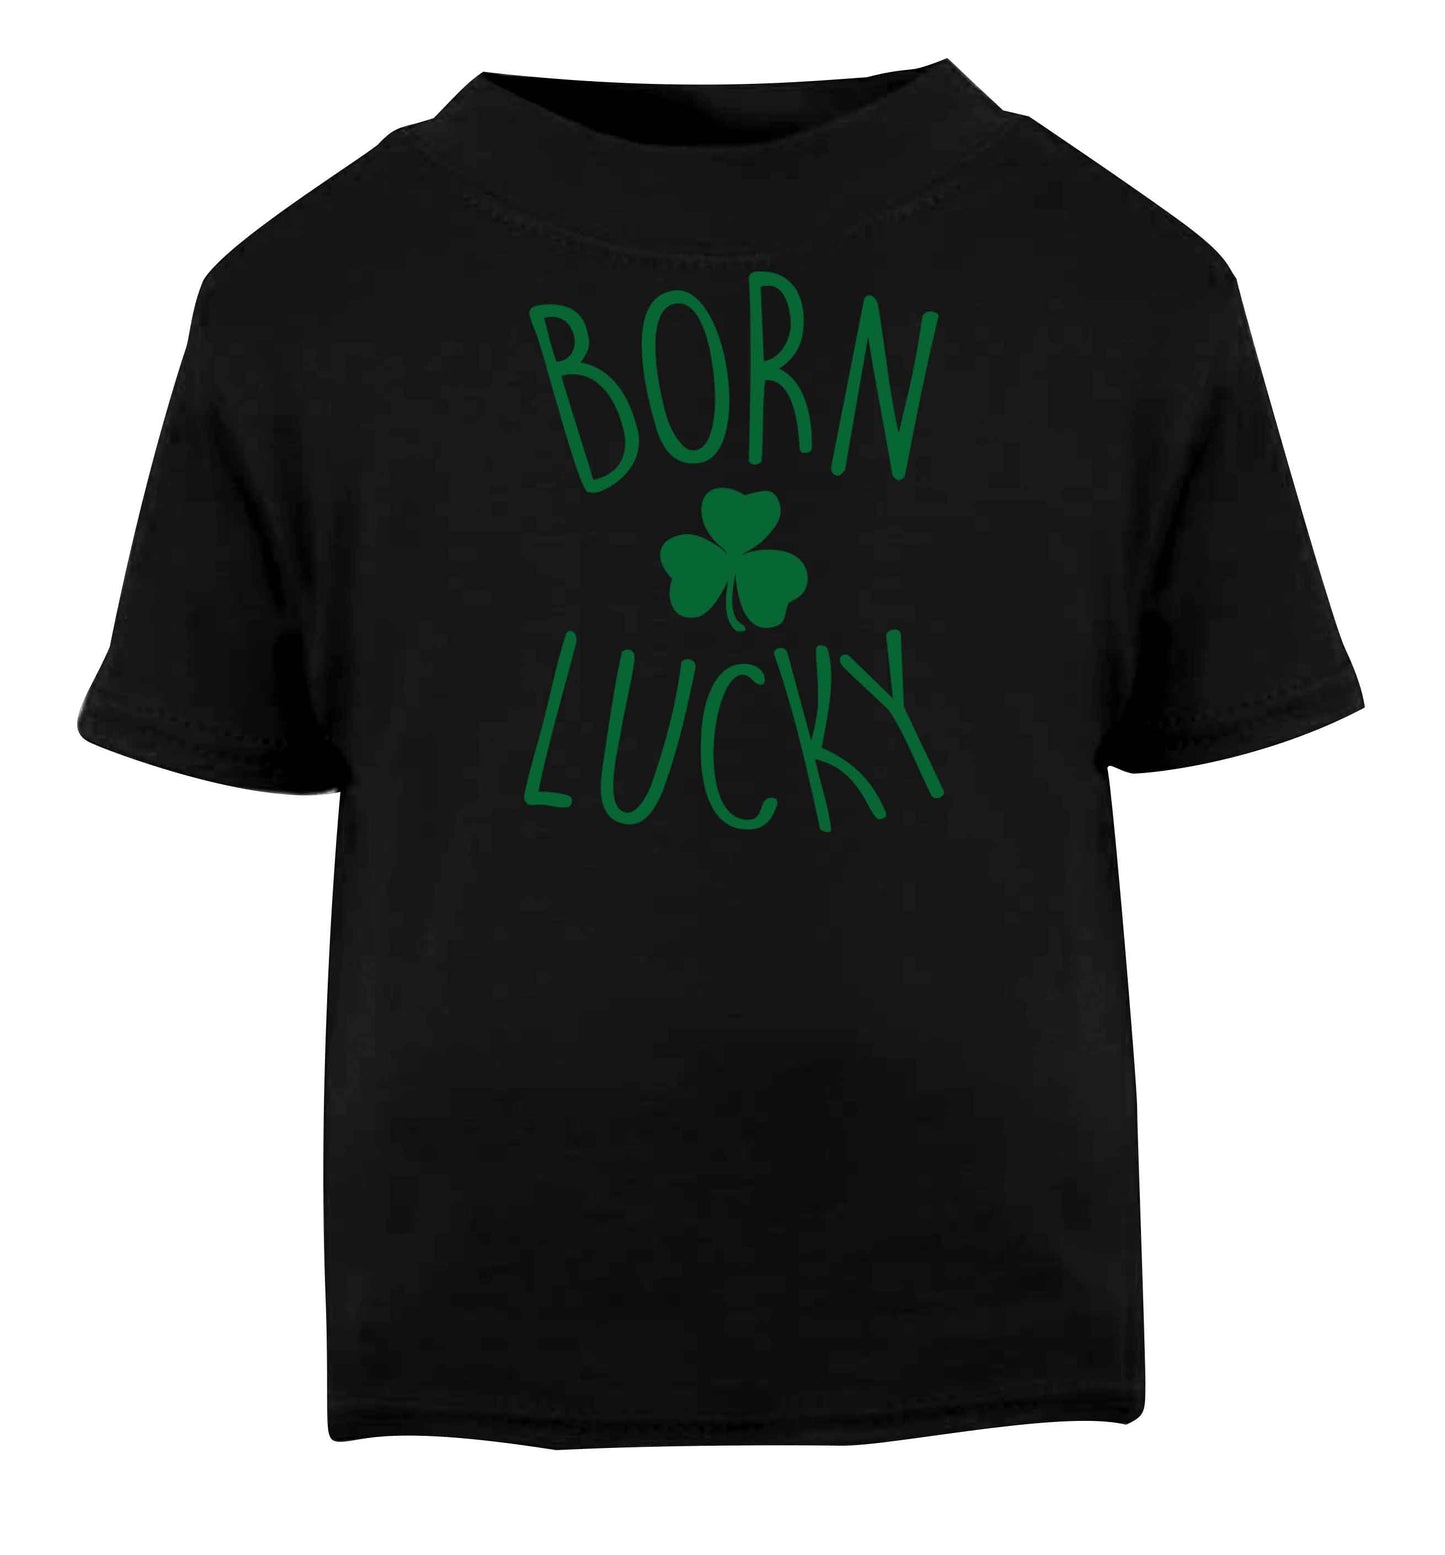 Born Lucky Black baby toddler Tshirt 2 years